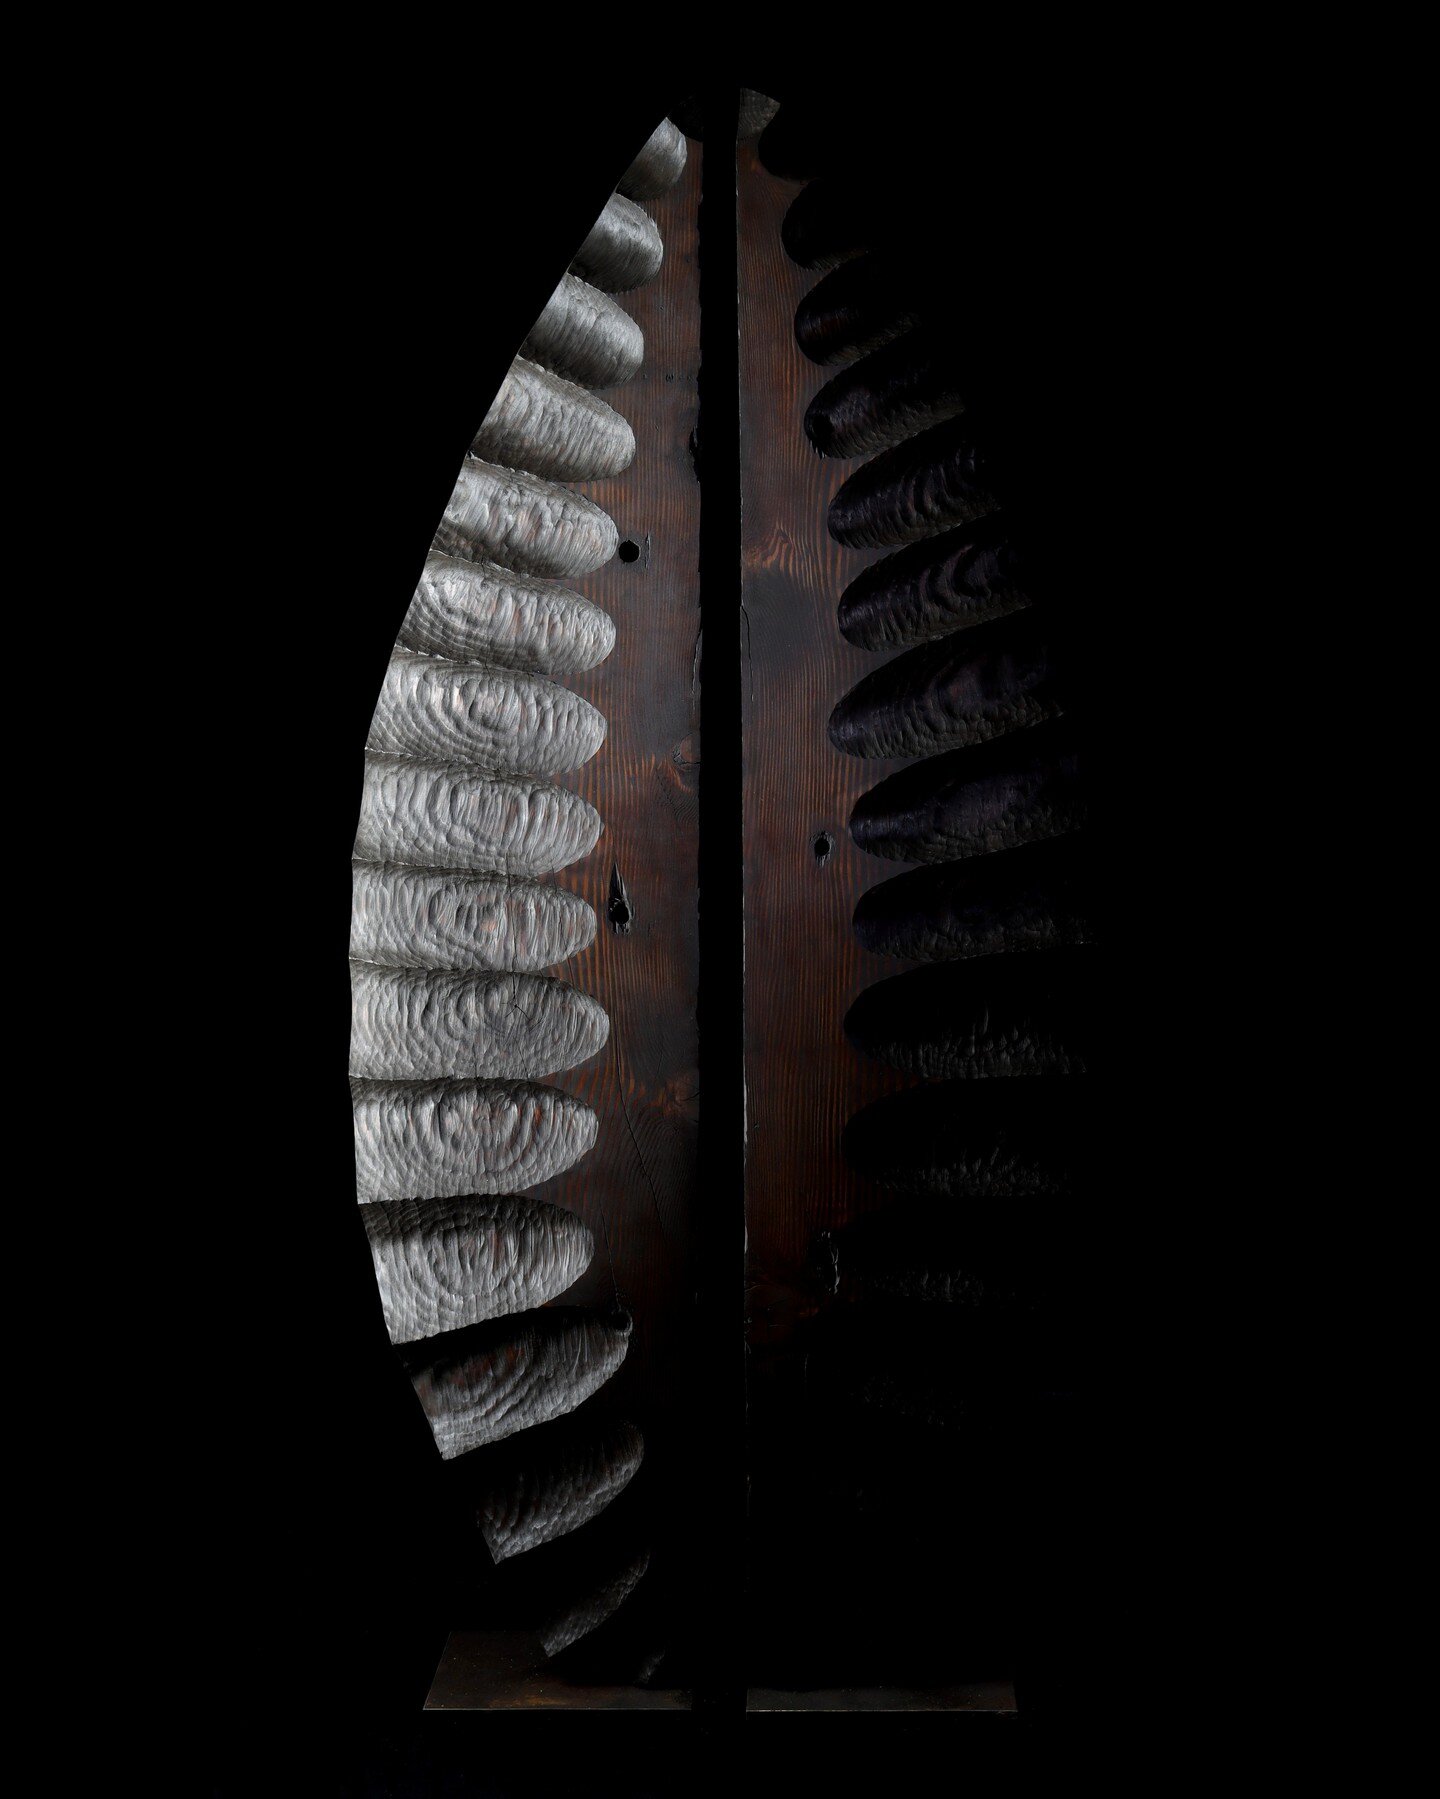 Leaf
2021
Pseudotsuga Menziessi (Oregon) &amp; Mild Steel
177cm x 78cm x 24cm
https://www.lucasguilbert.com/sculptures/leaf

#reclaimed #timber #wood #madera #bois #texture #motif #pattern #naturalaart #artfromnature #upcycledart #art #sculpture #woo